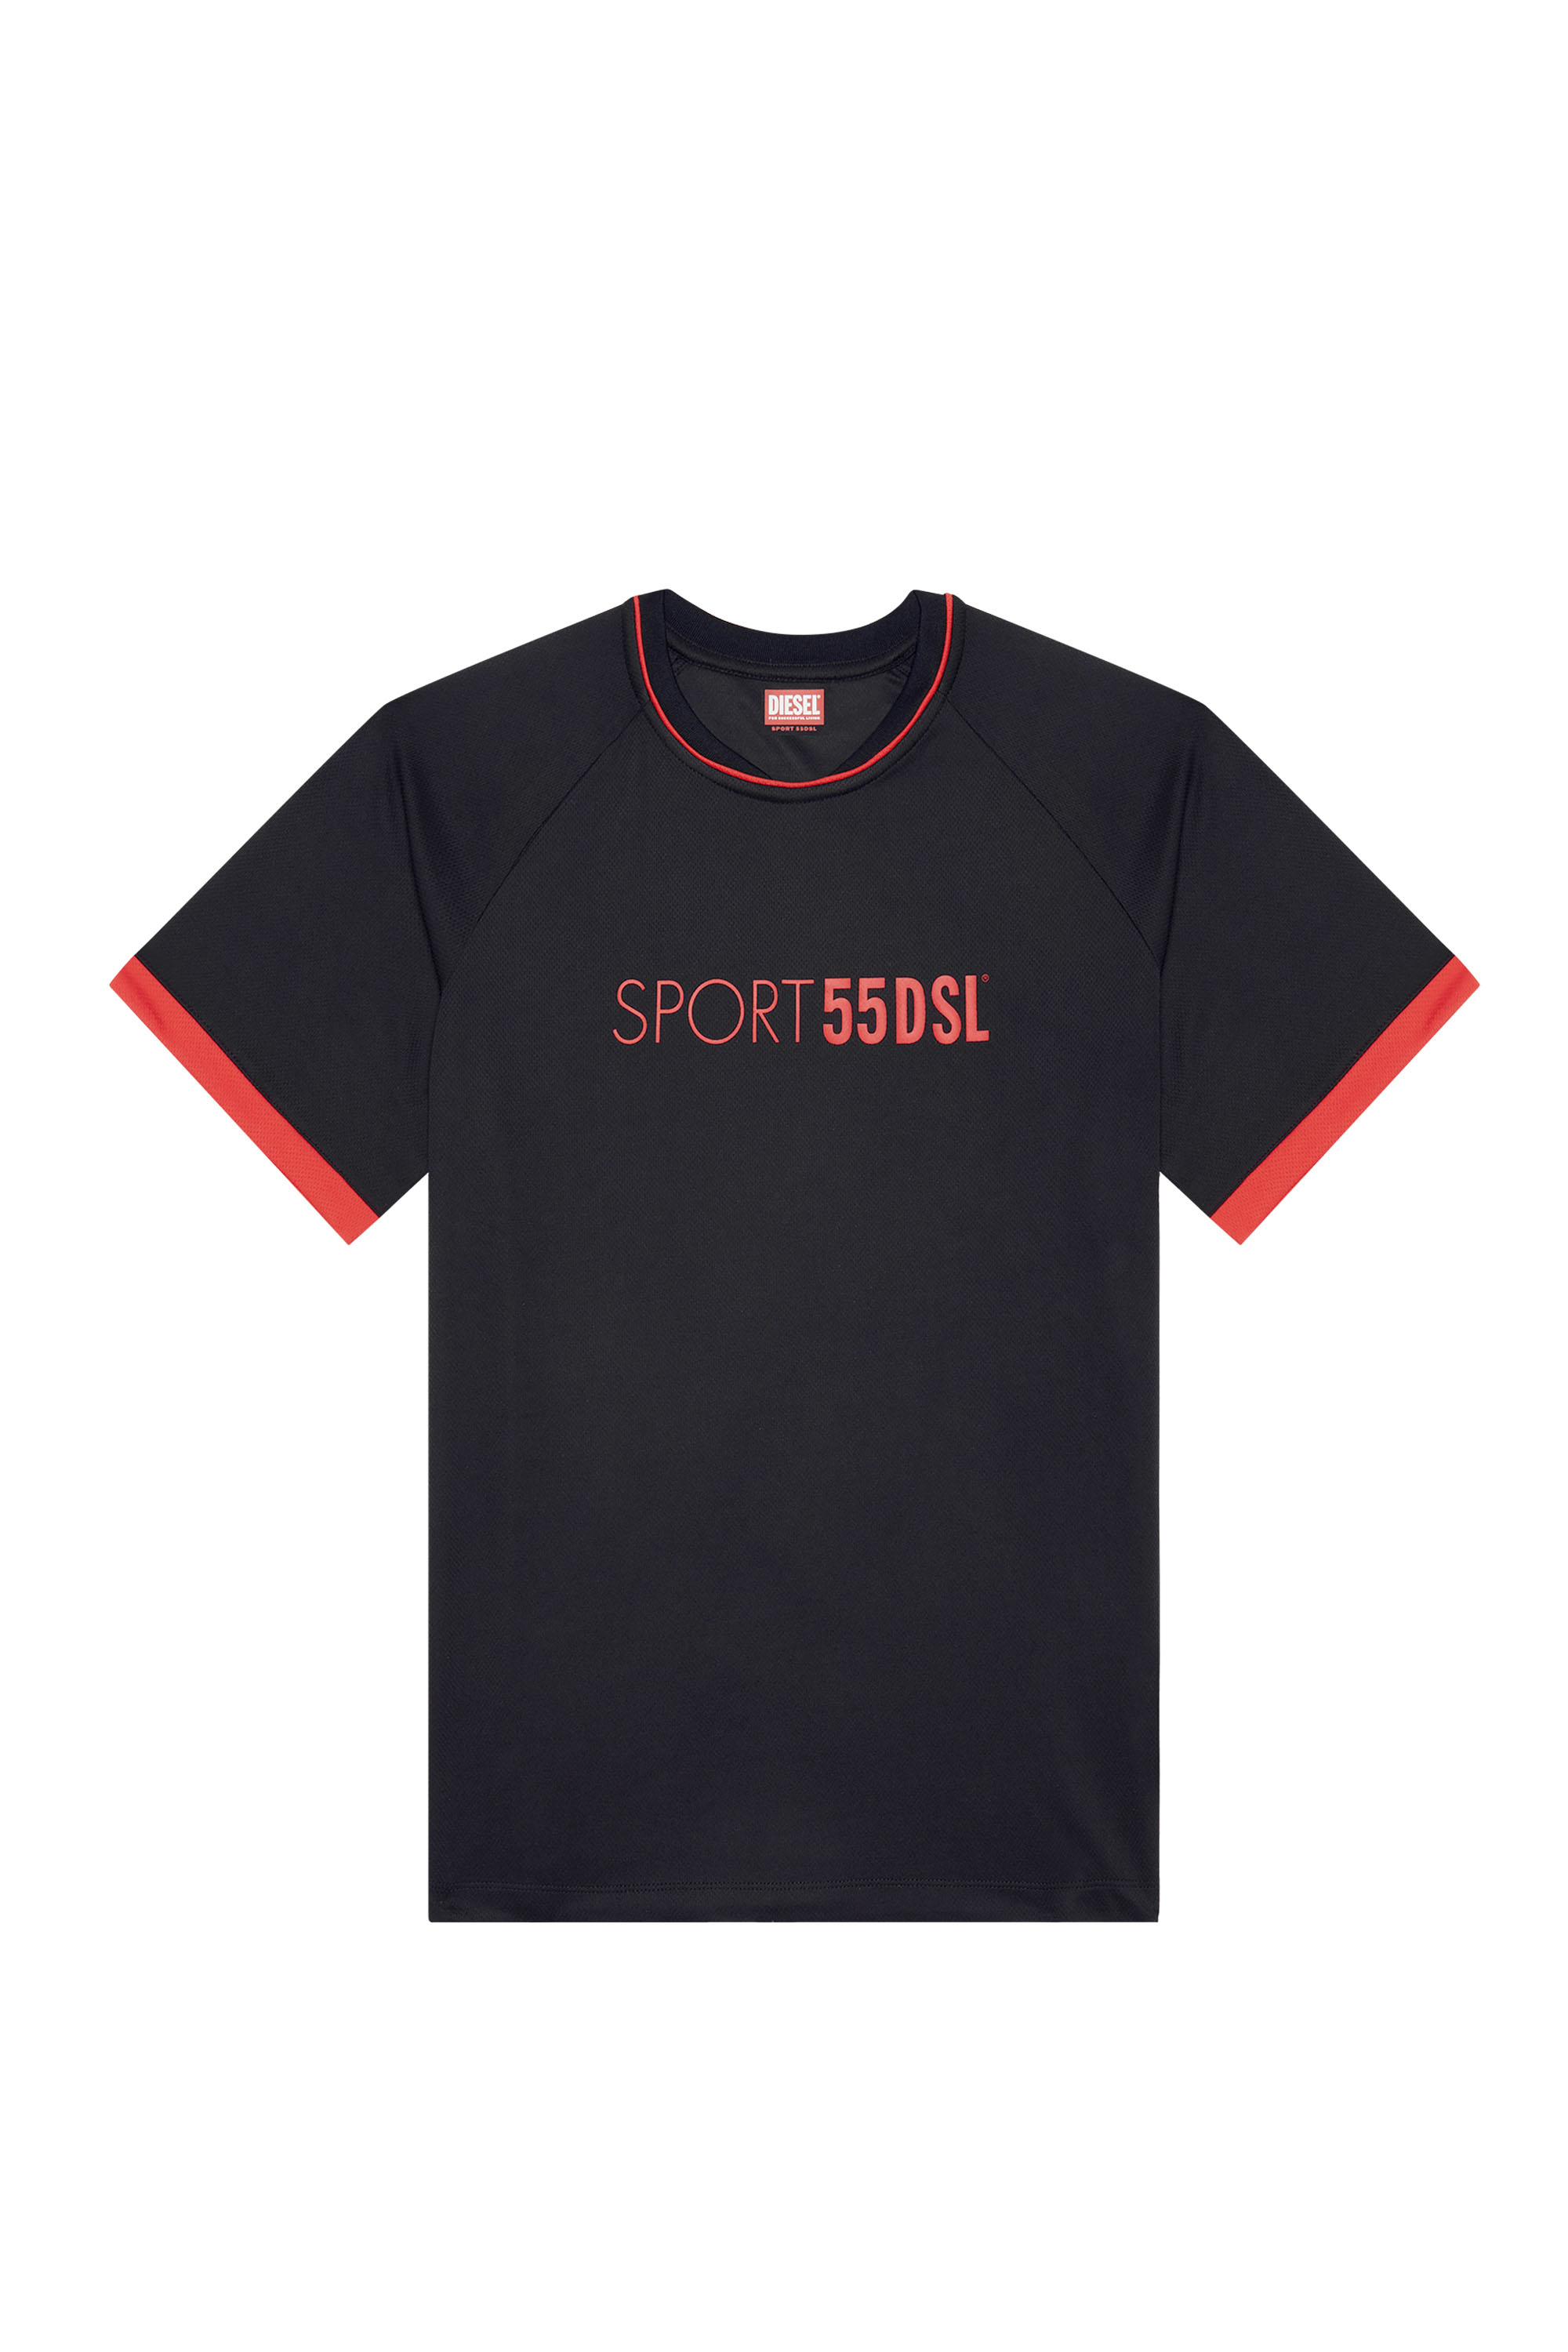 AMTEE-CROSSOON-WT15, Schwarz - T-Shirts